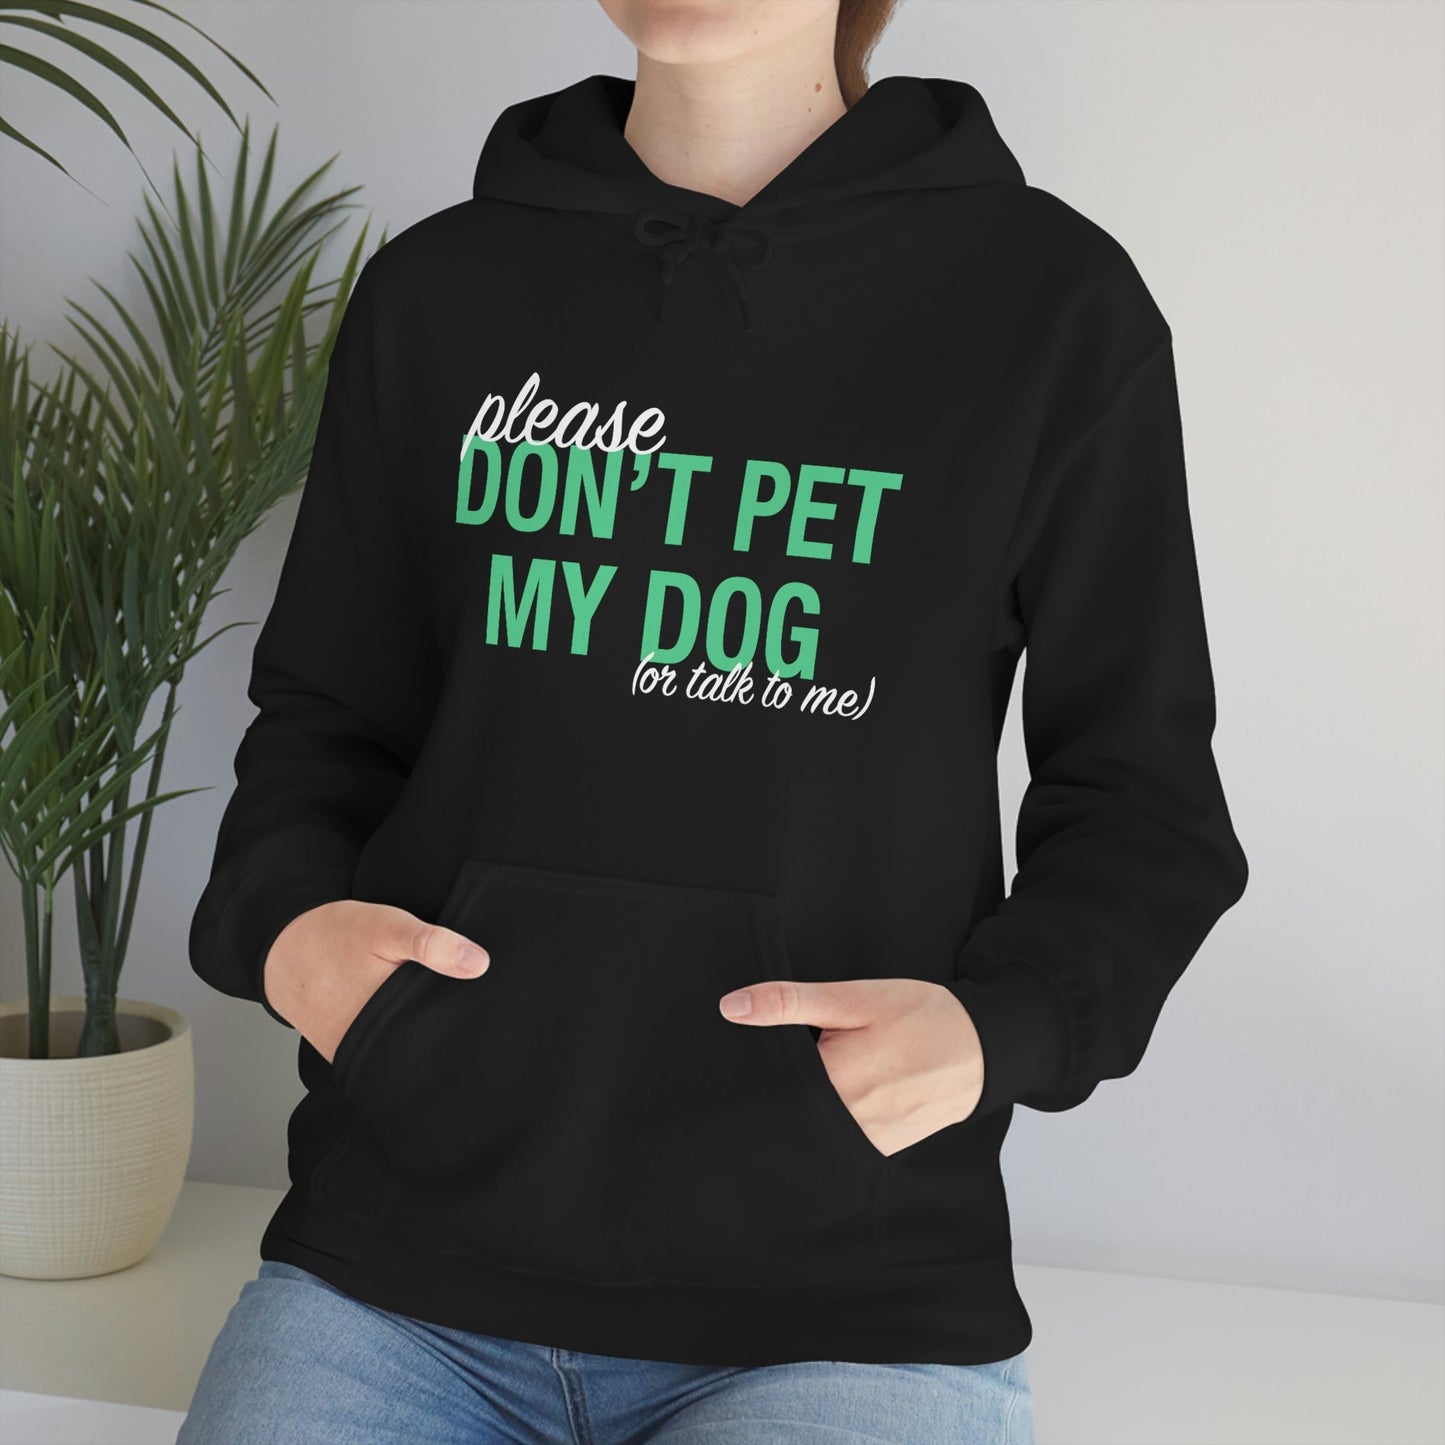 Please Don't Pet My Dog (Or Talk To Me) | Hooded Sweatshirt - Detezi Designs-28180178126553224982